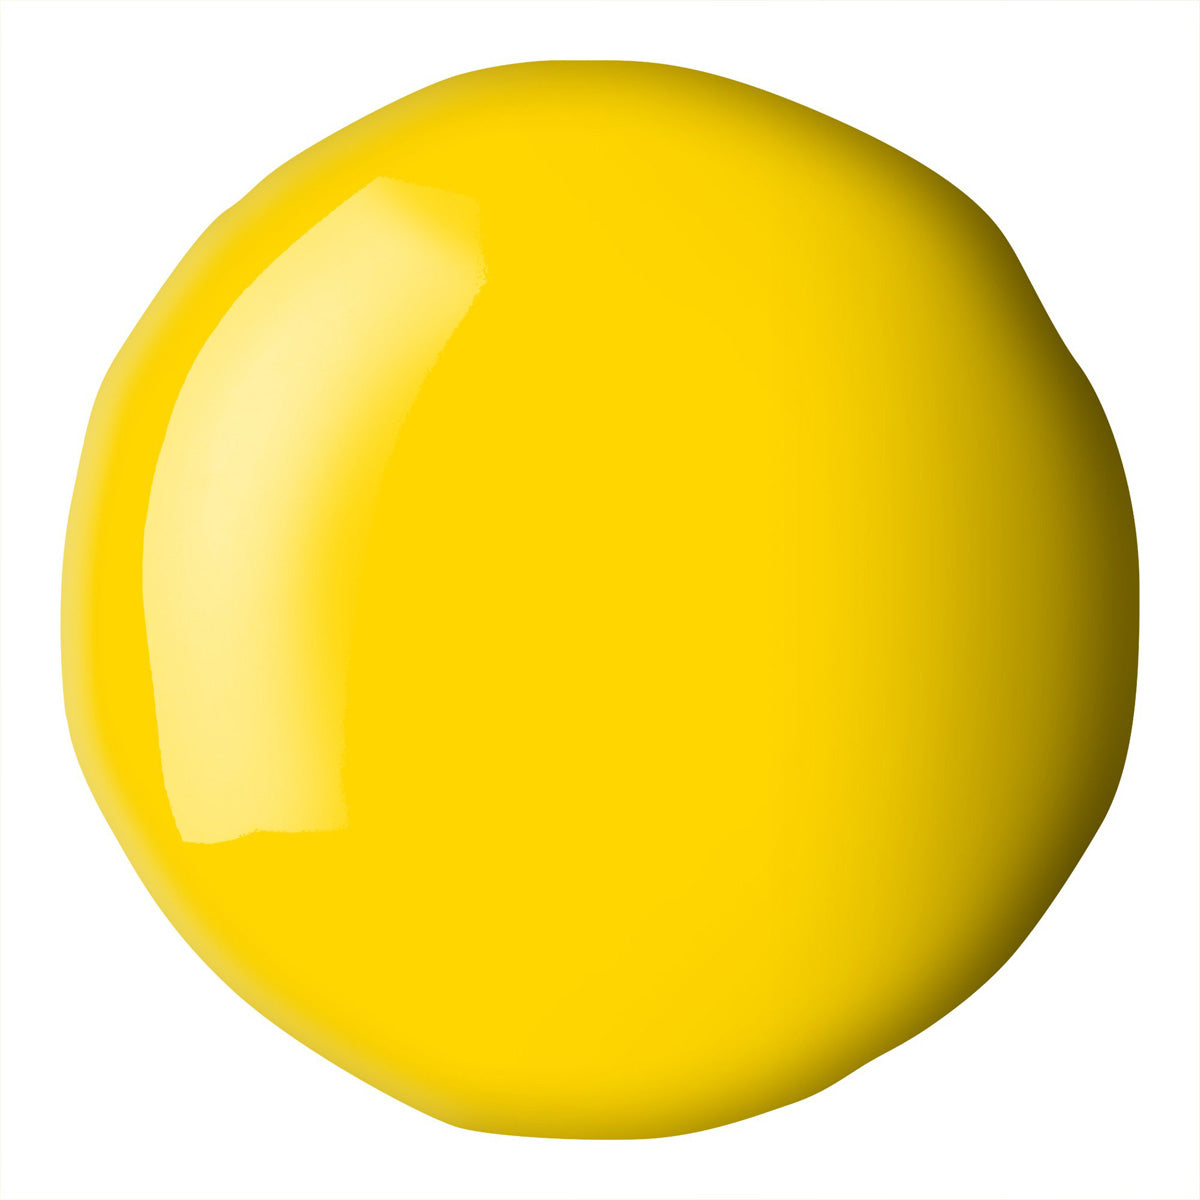 Liquitex Basics Fluid Acrylic 118ml - Cadmium Yellow Medium Hue S1